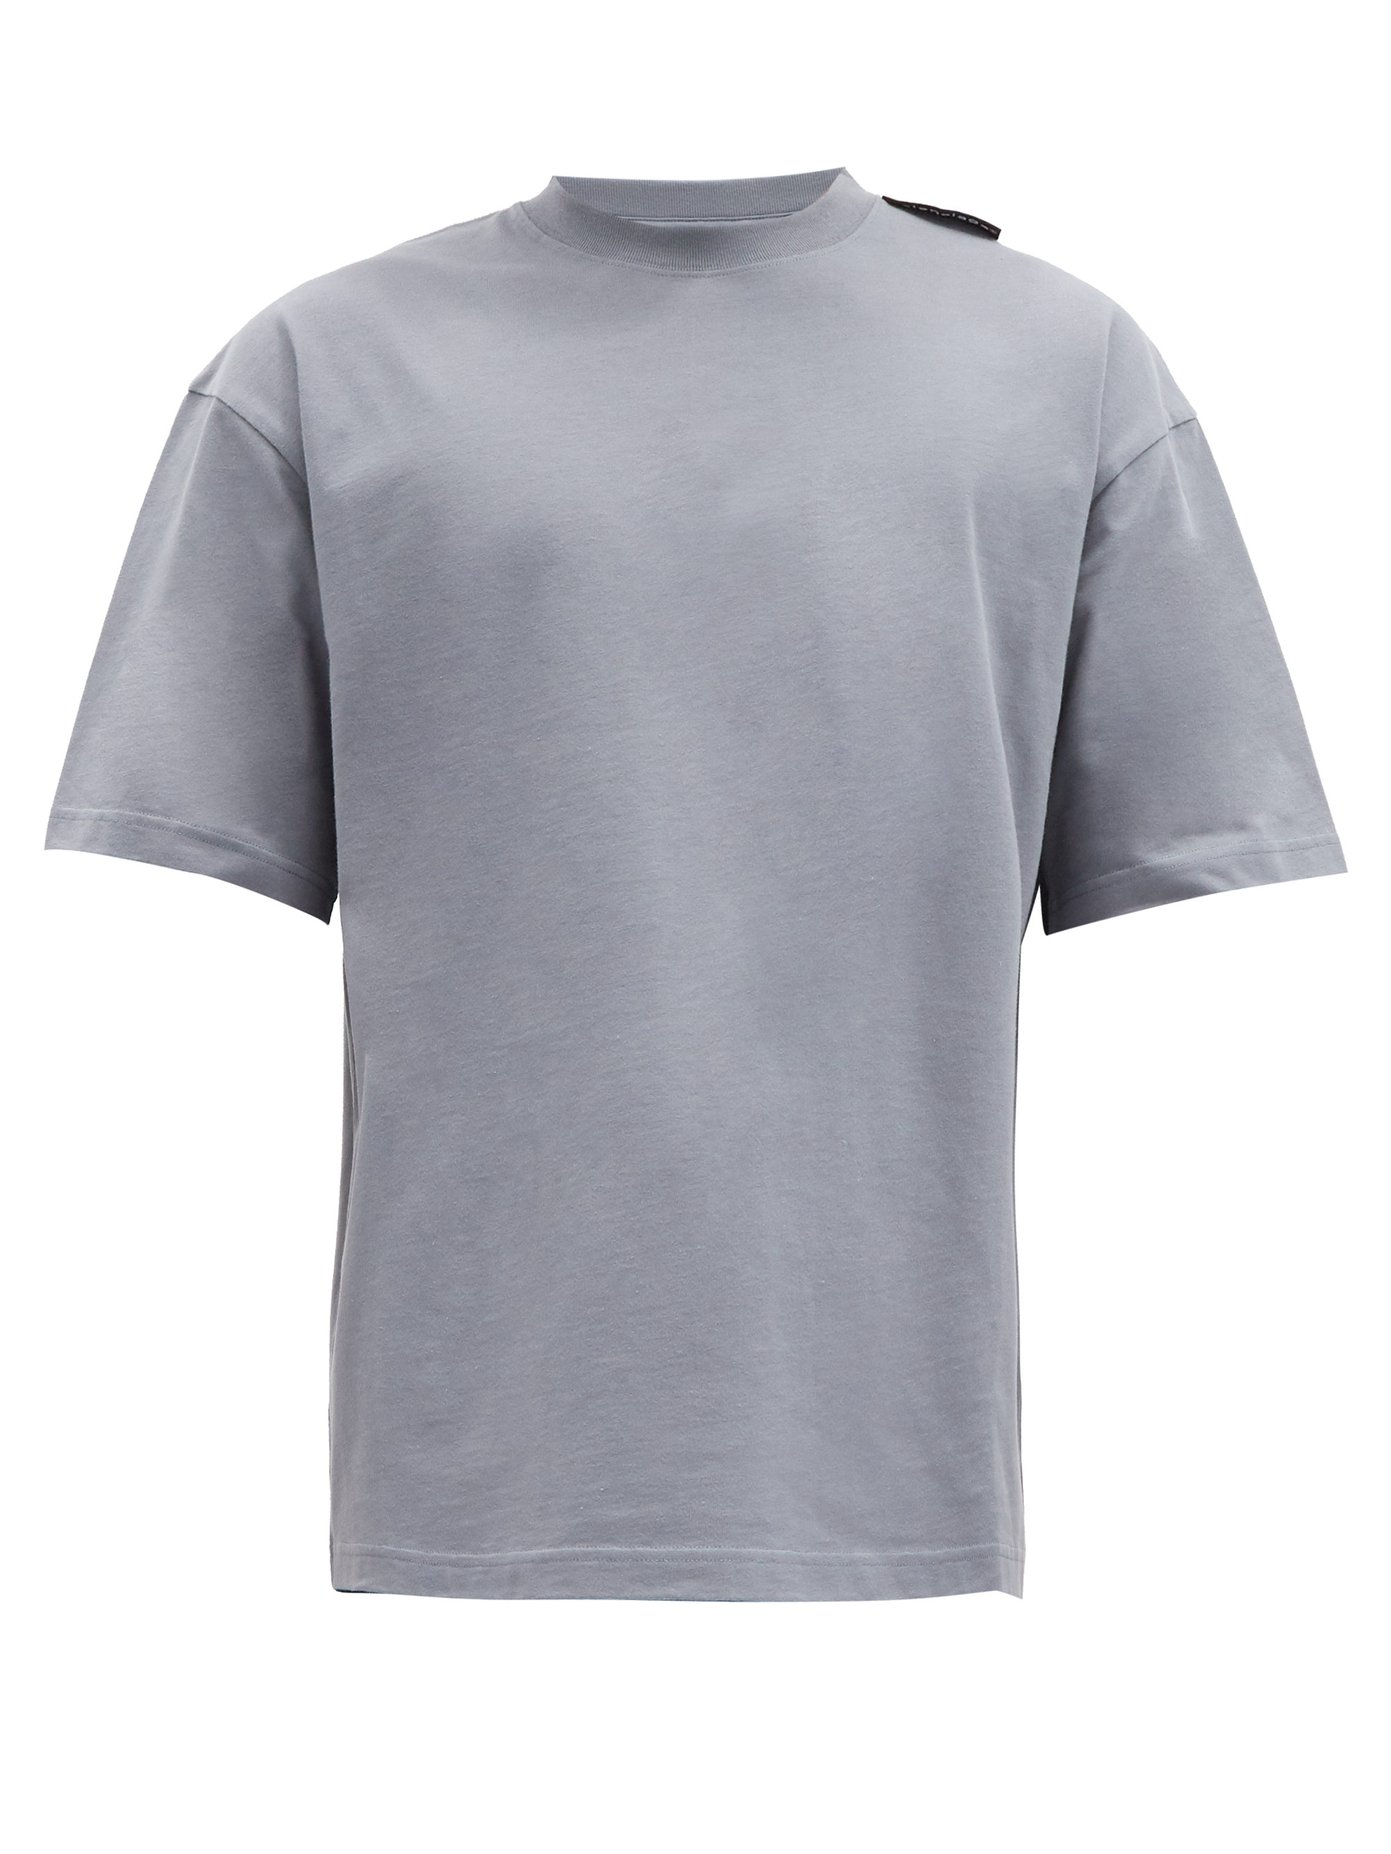 balenciaga grey t shirt